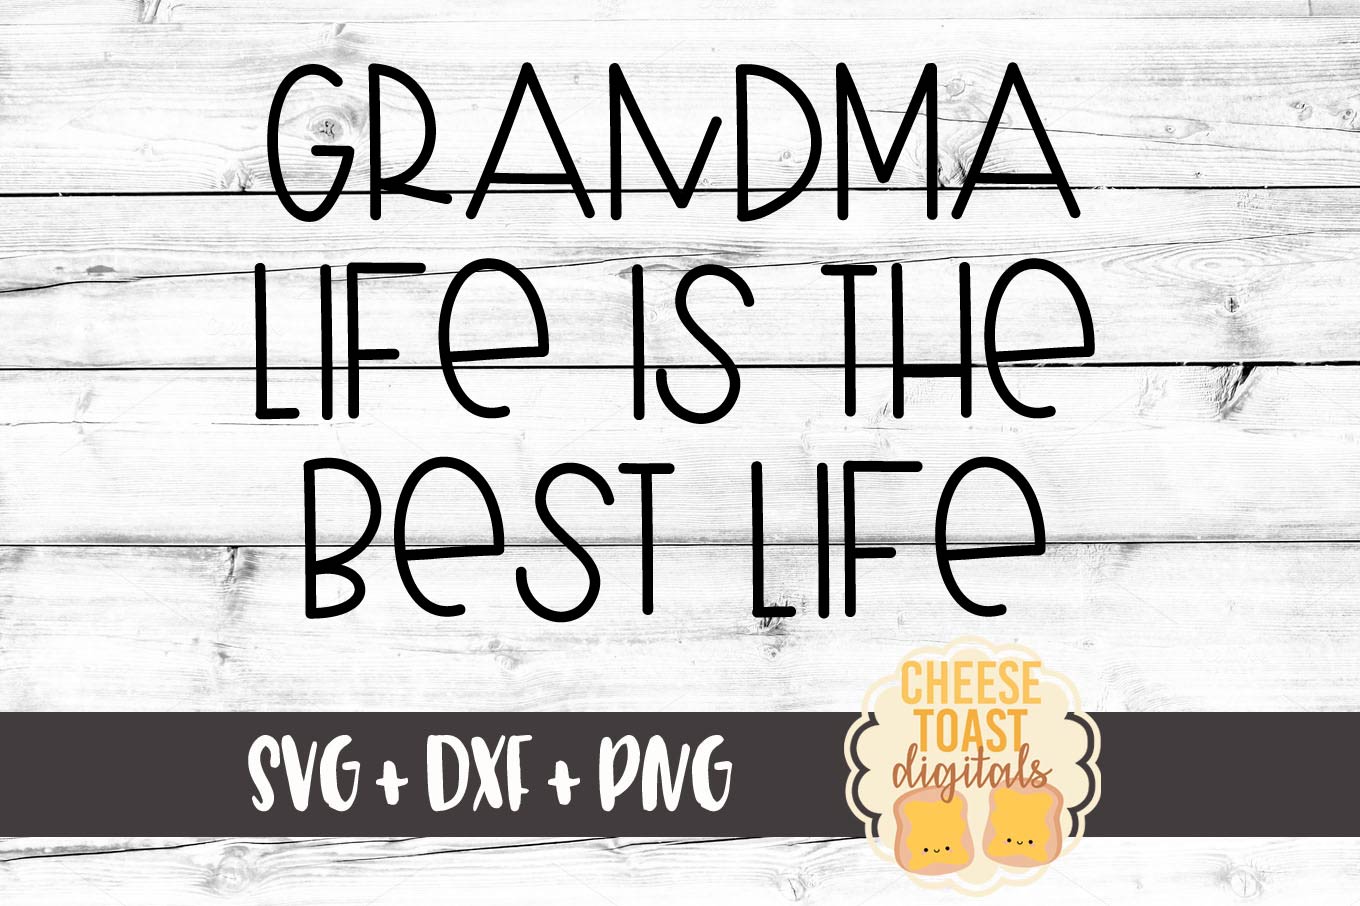 Download Grandma Life Is The Best Life - Grandma SVG File